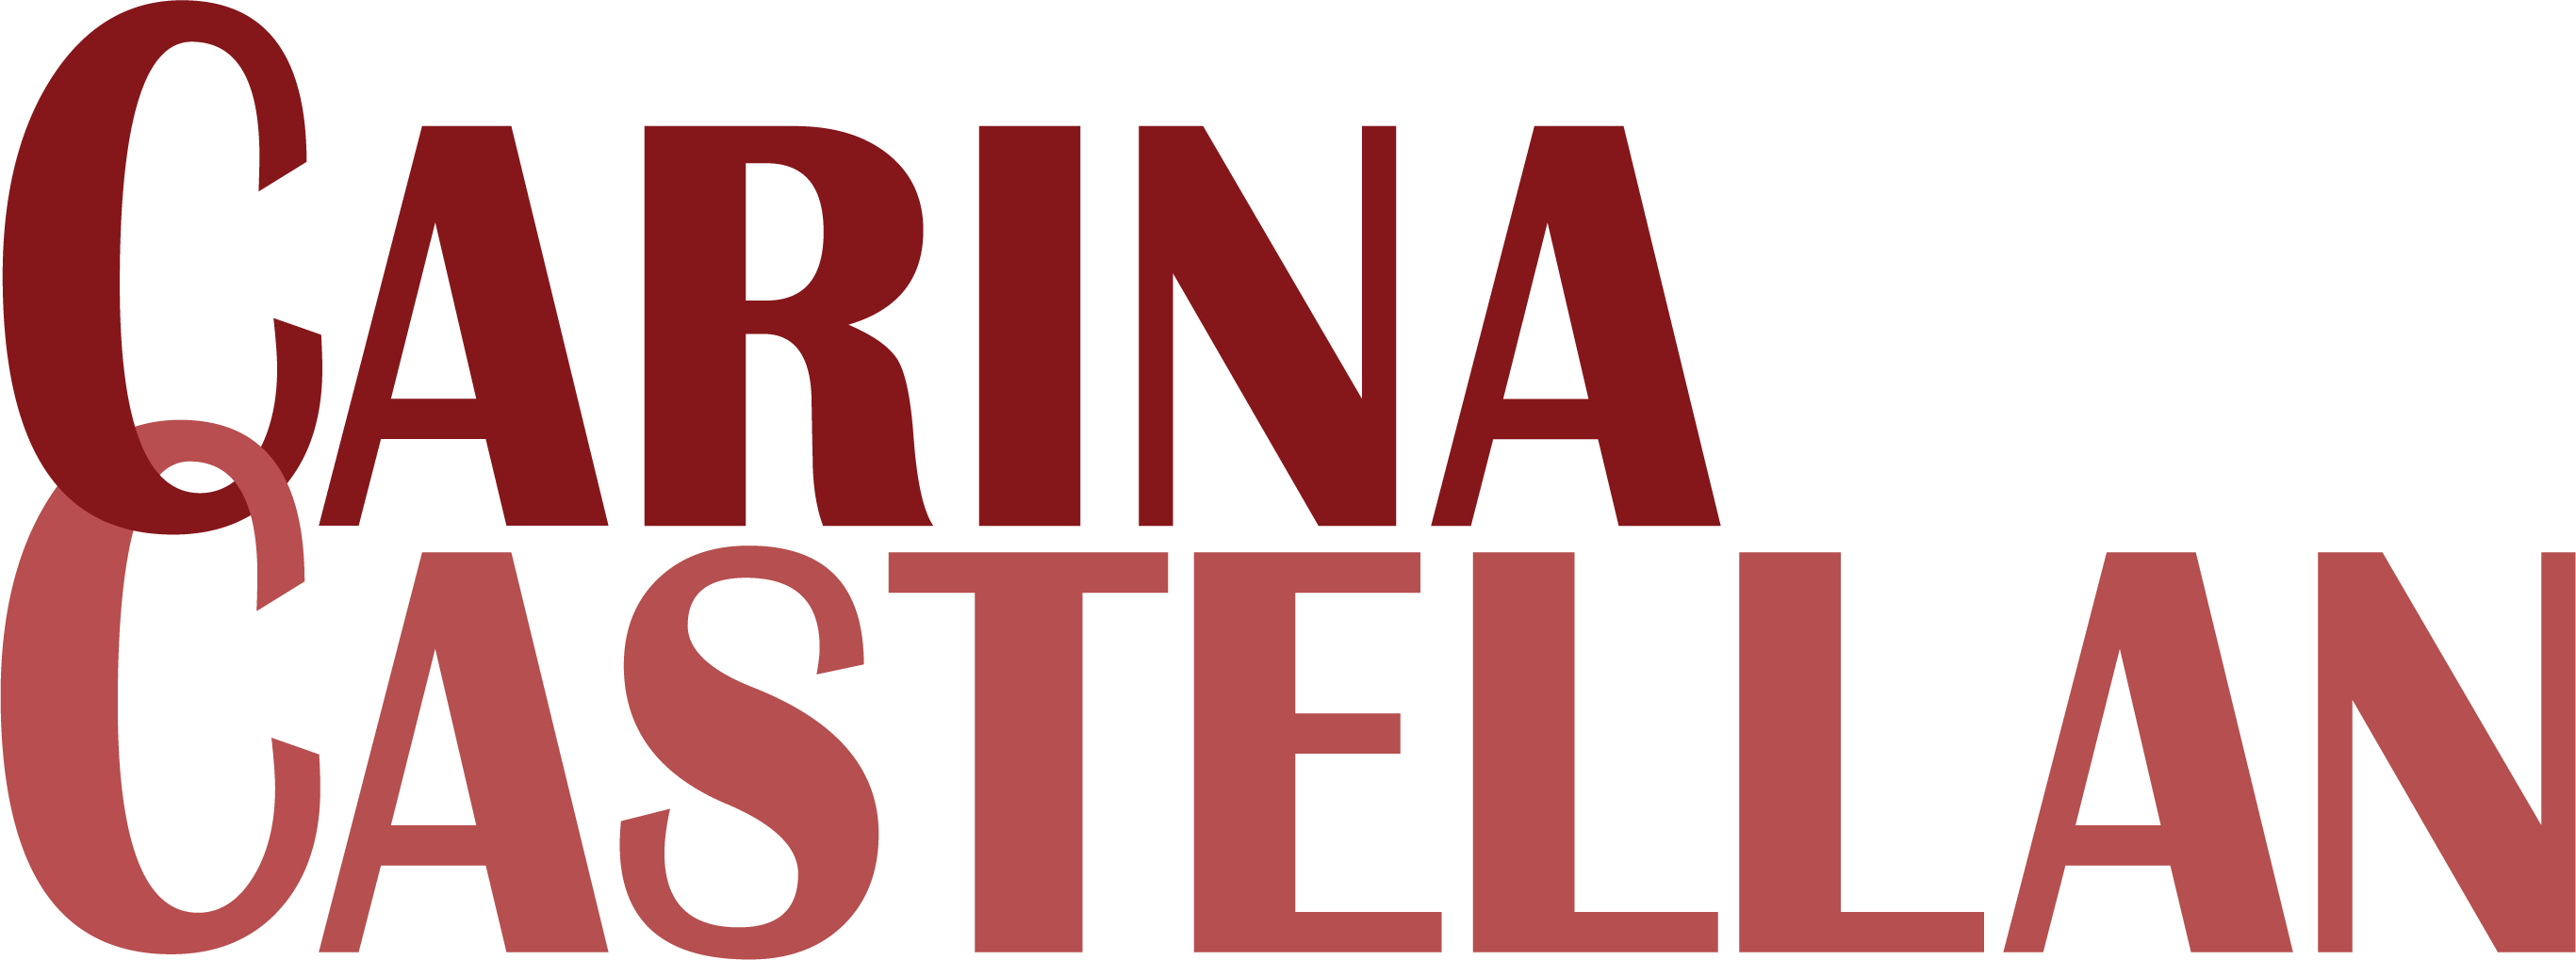 Carina Castellan logo